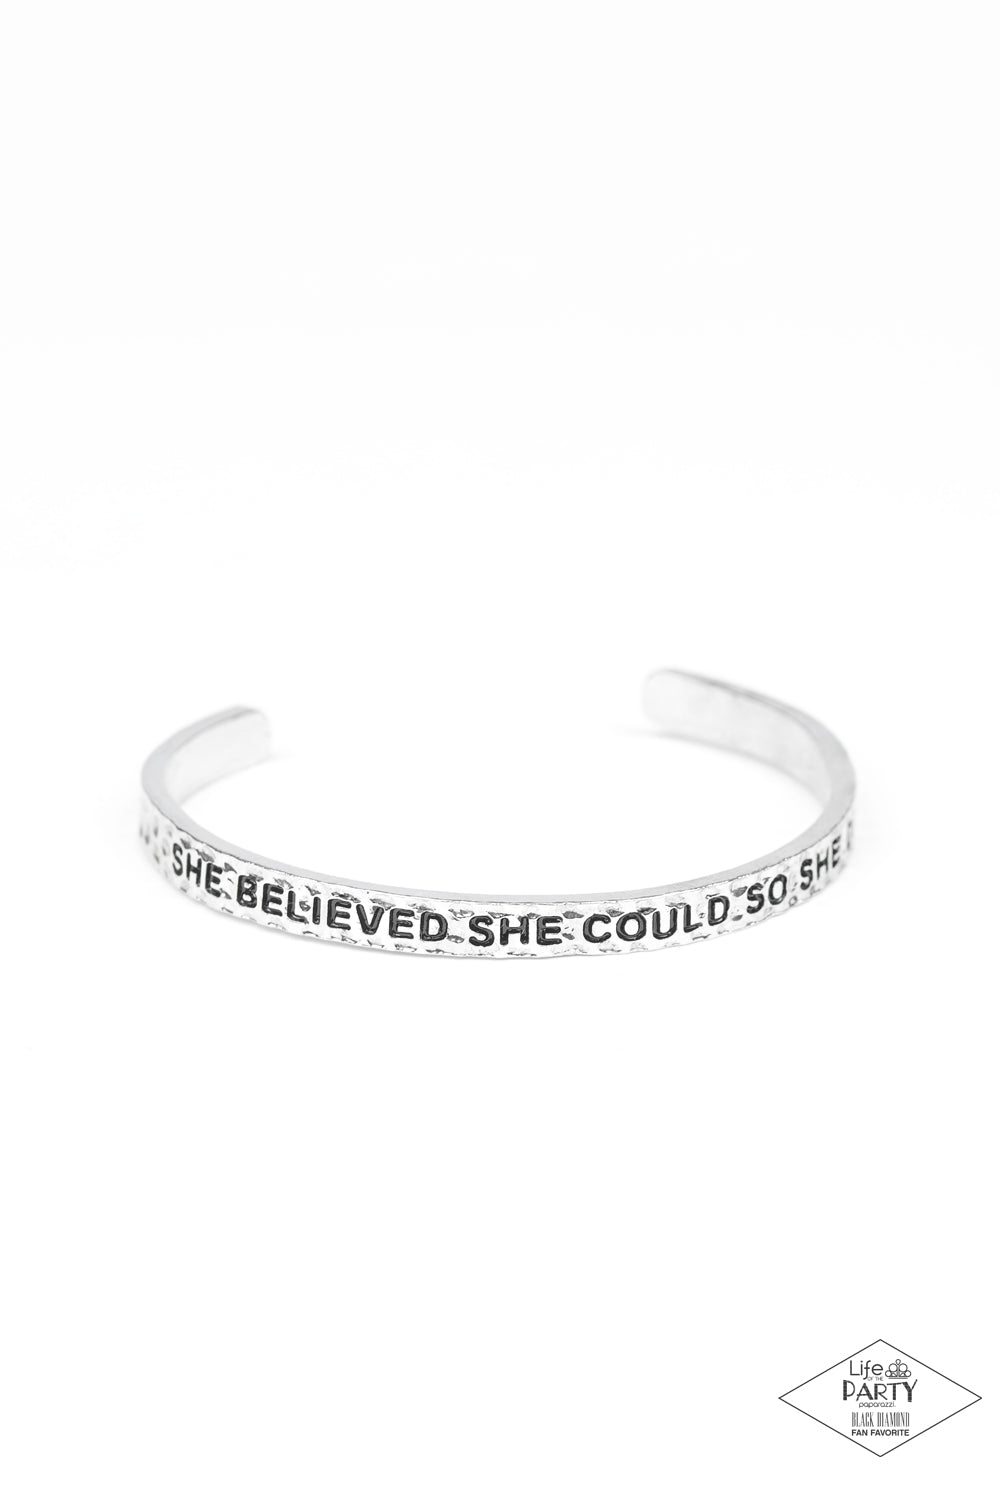 She Believed She Could - Silver bracelet